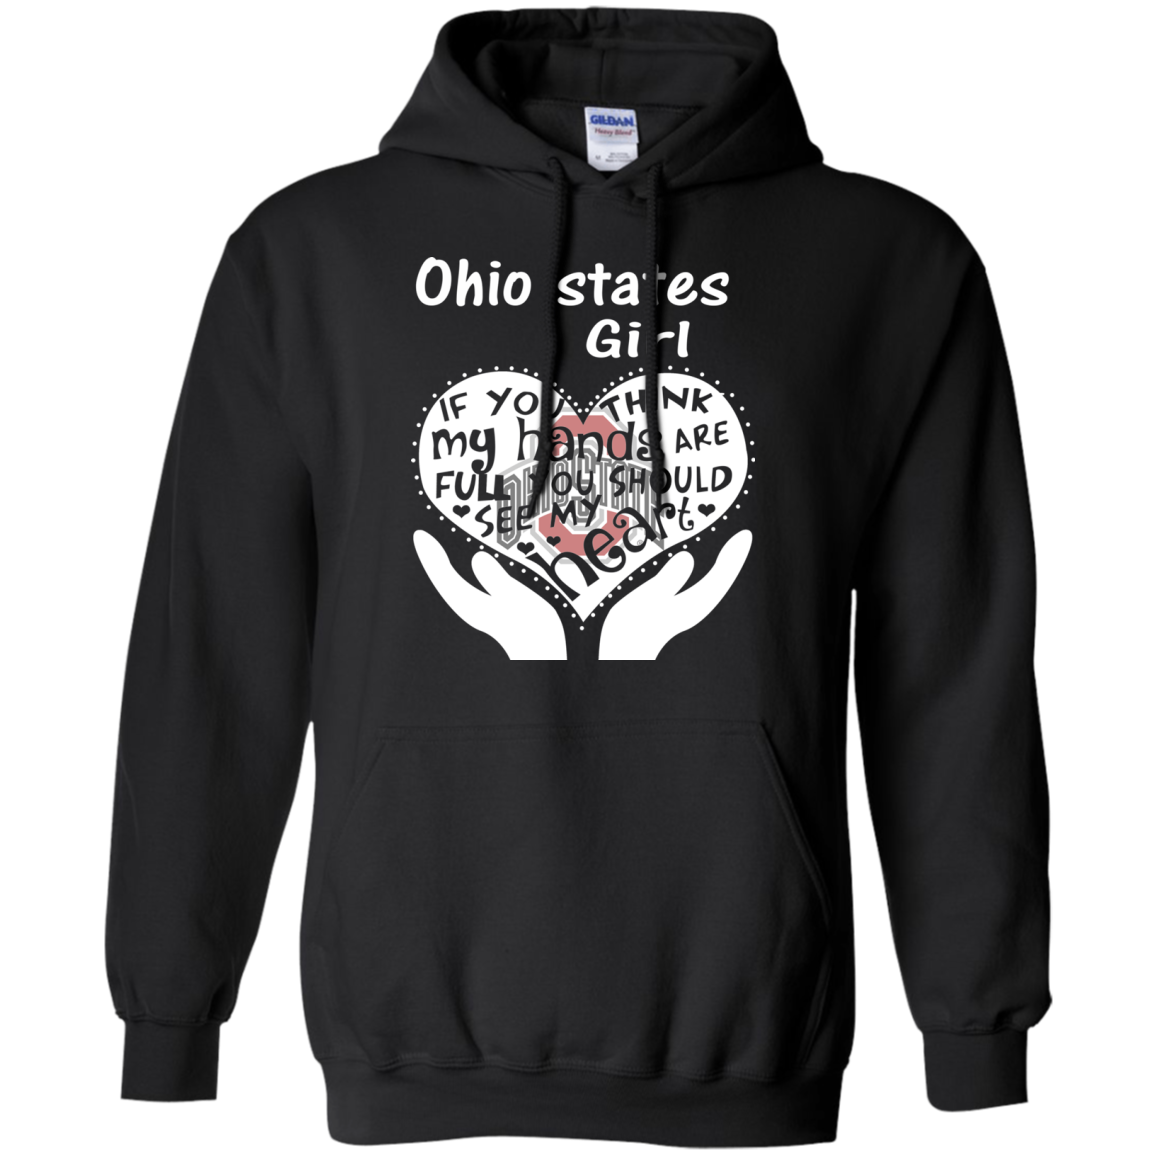 Ohio States Girl T-shirts S